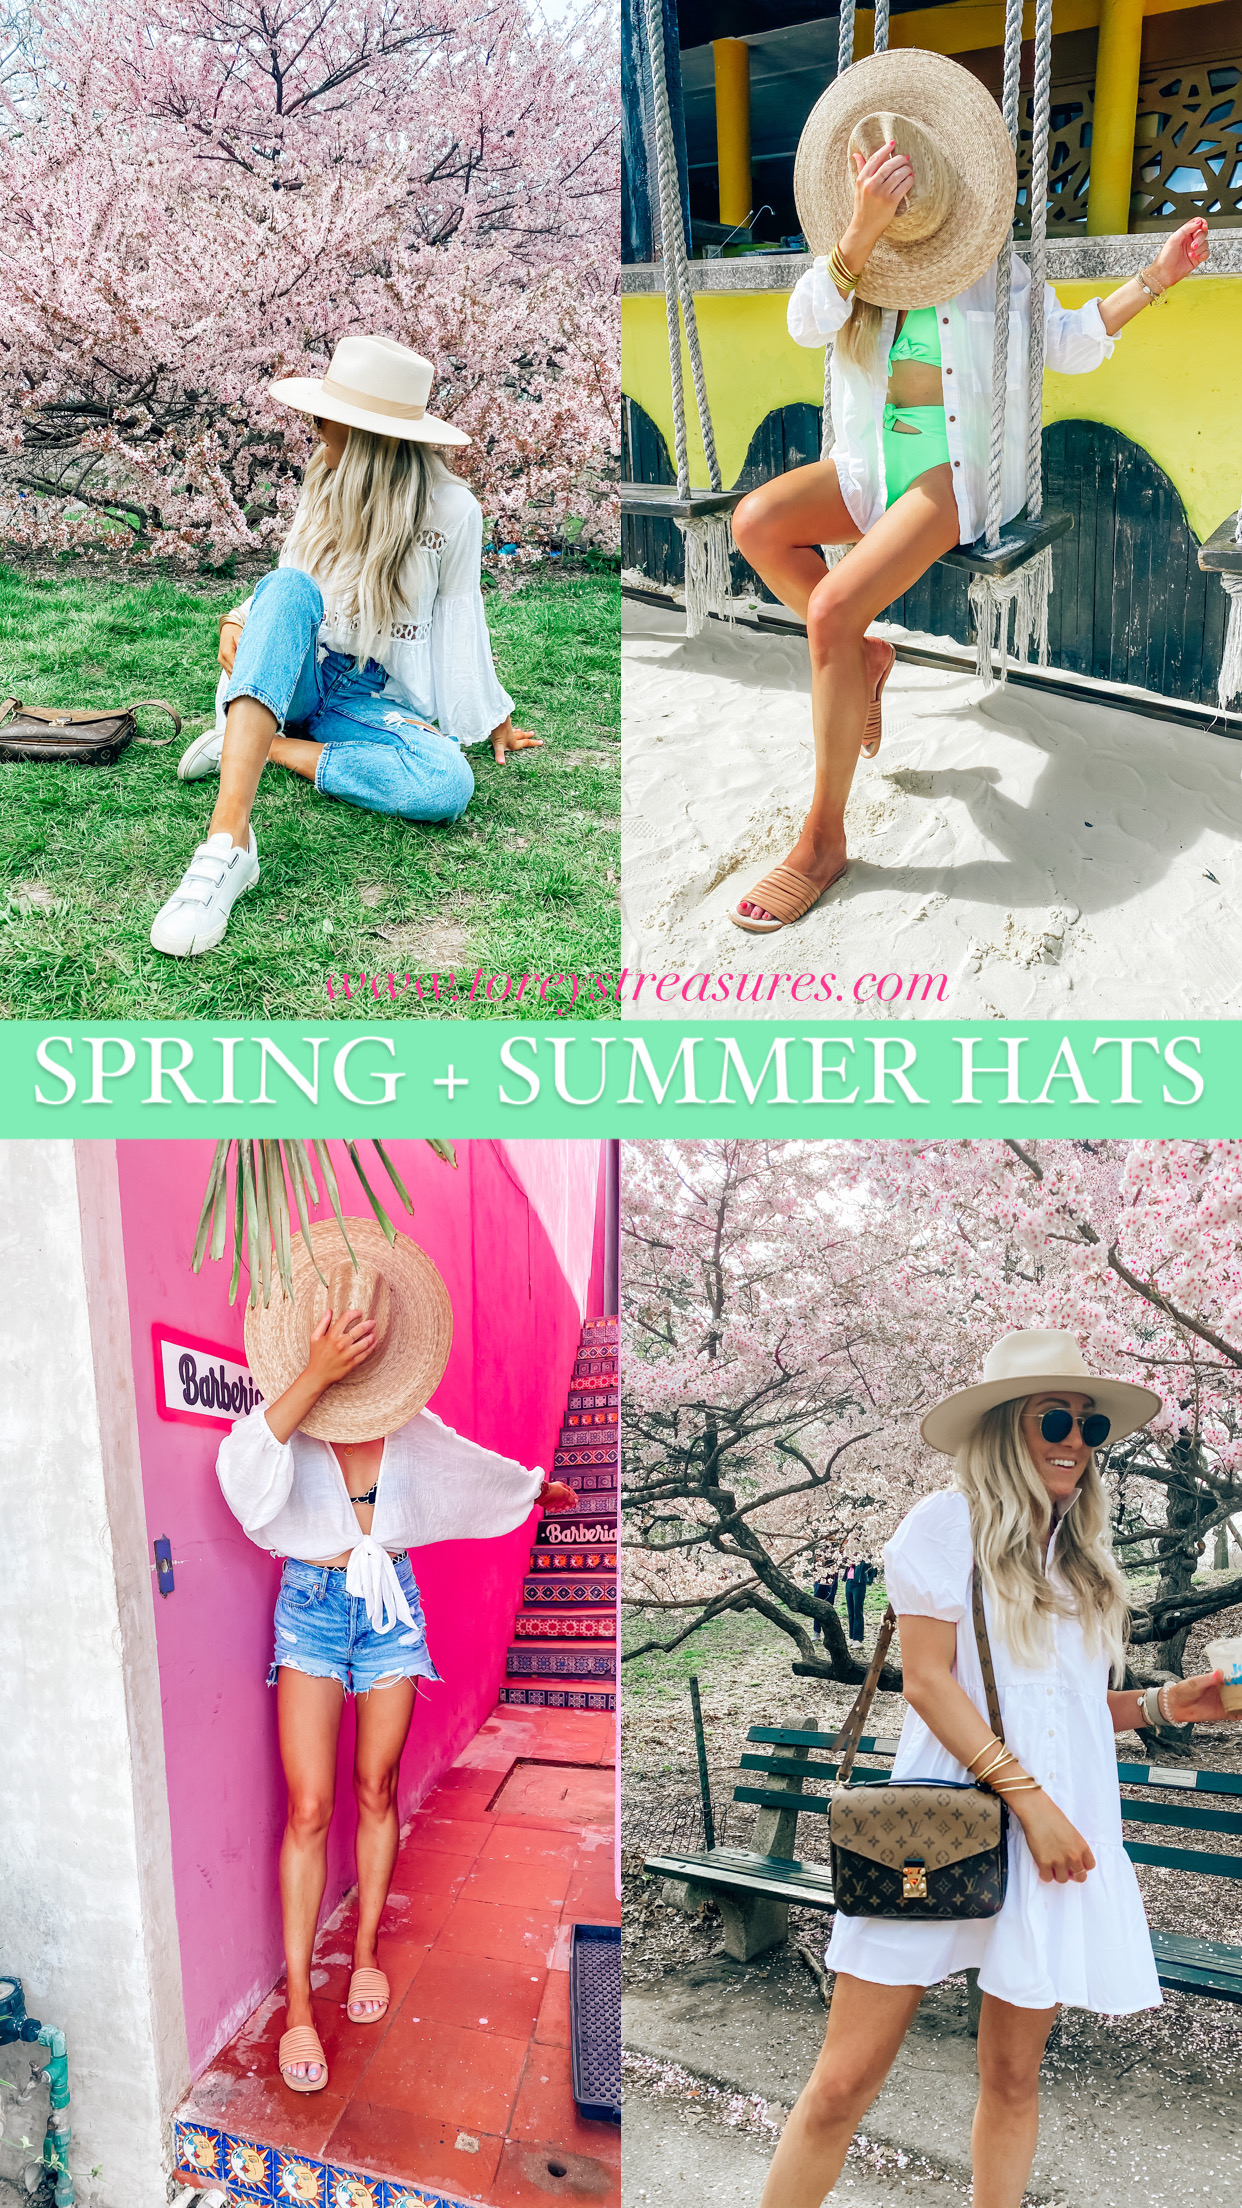 https://www.toreystreasures.com/wp-content/uploads/2021/04/spring-and-summer-hats-toreystreasures.jpg